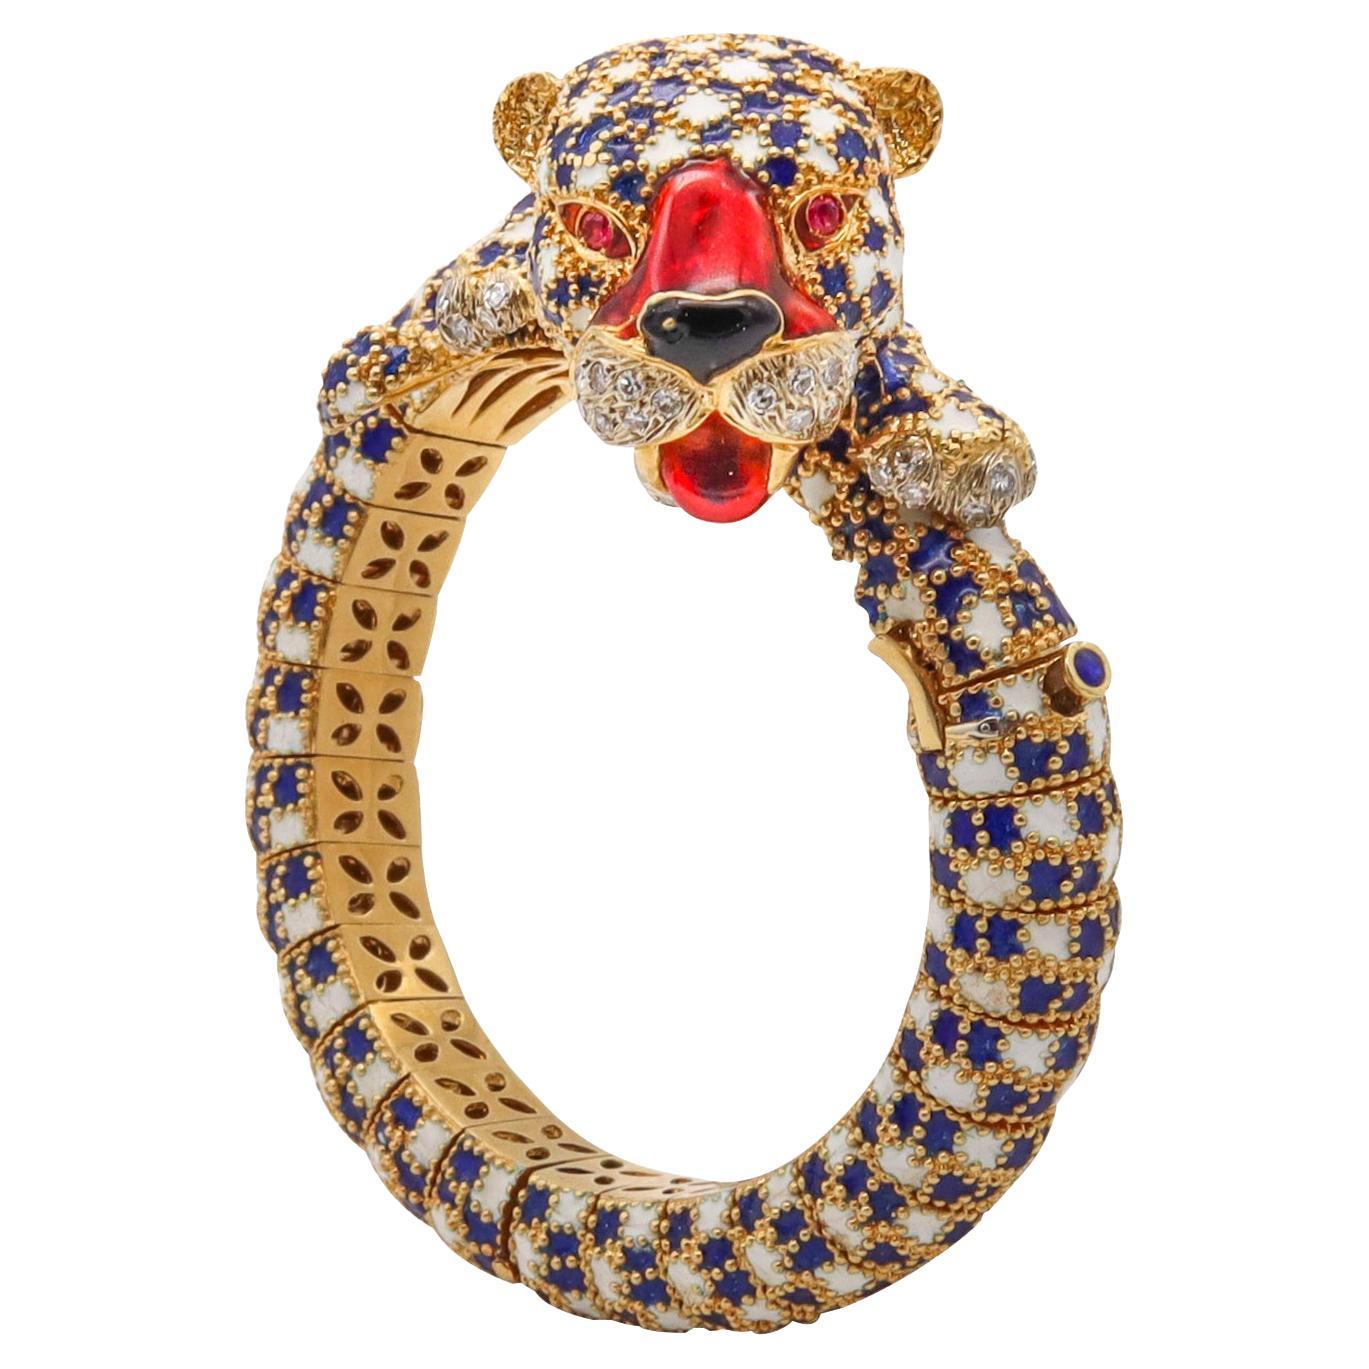 Frascarolo 1960 Italy Tiger Bracelet in 18Kt Yellow Gold Enamel Diamonds Rubies